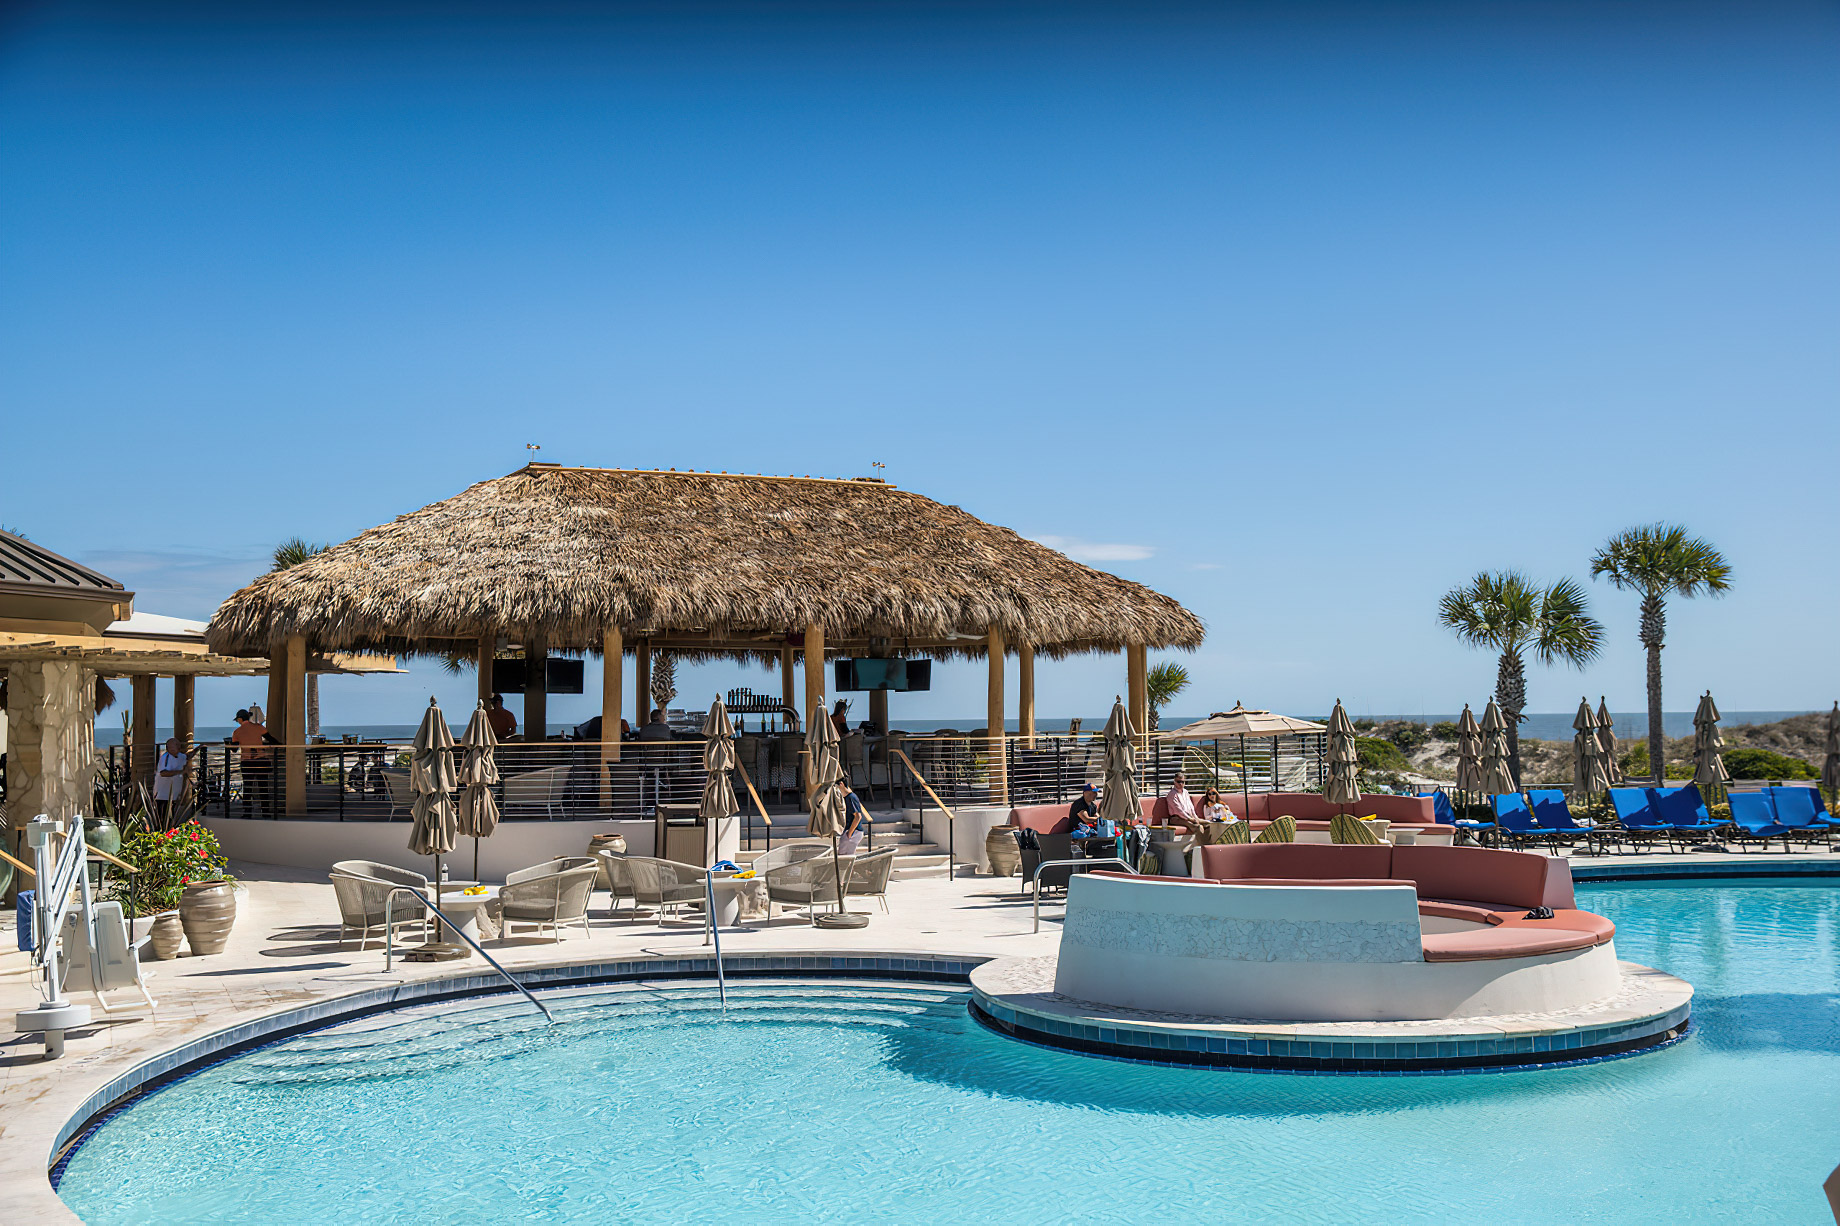 The Ritz-Carlton, Amelia Island Resort – Fernandina Beach, FL, USA – Exterior Pool Deck